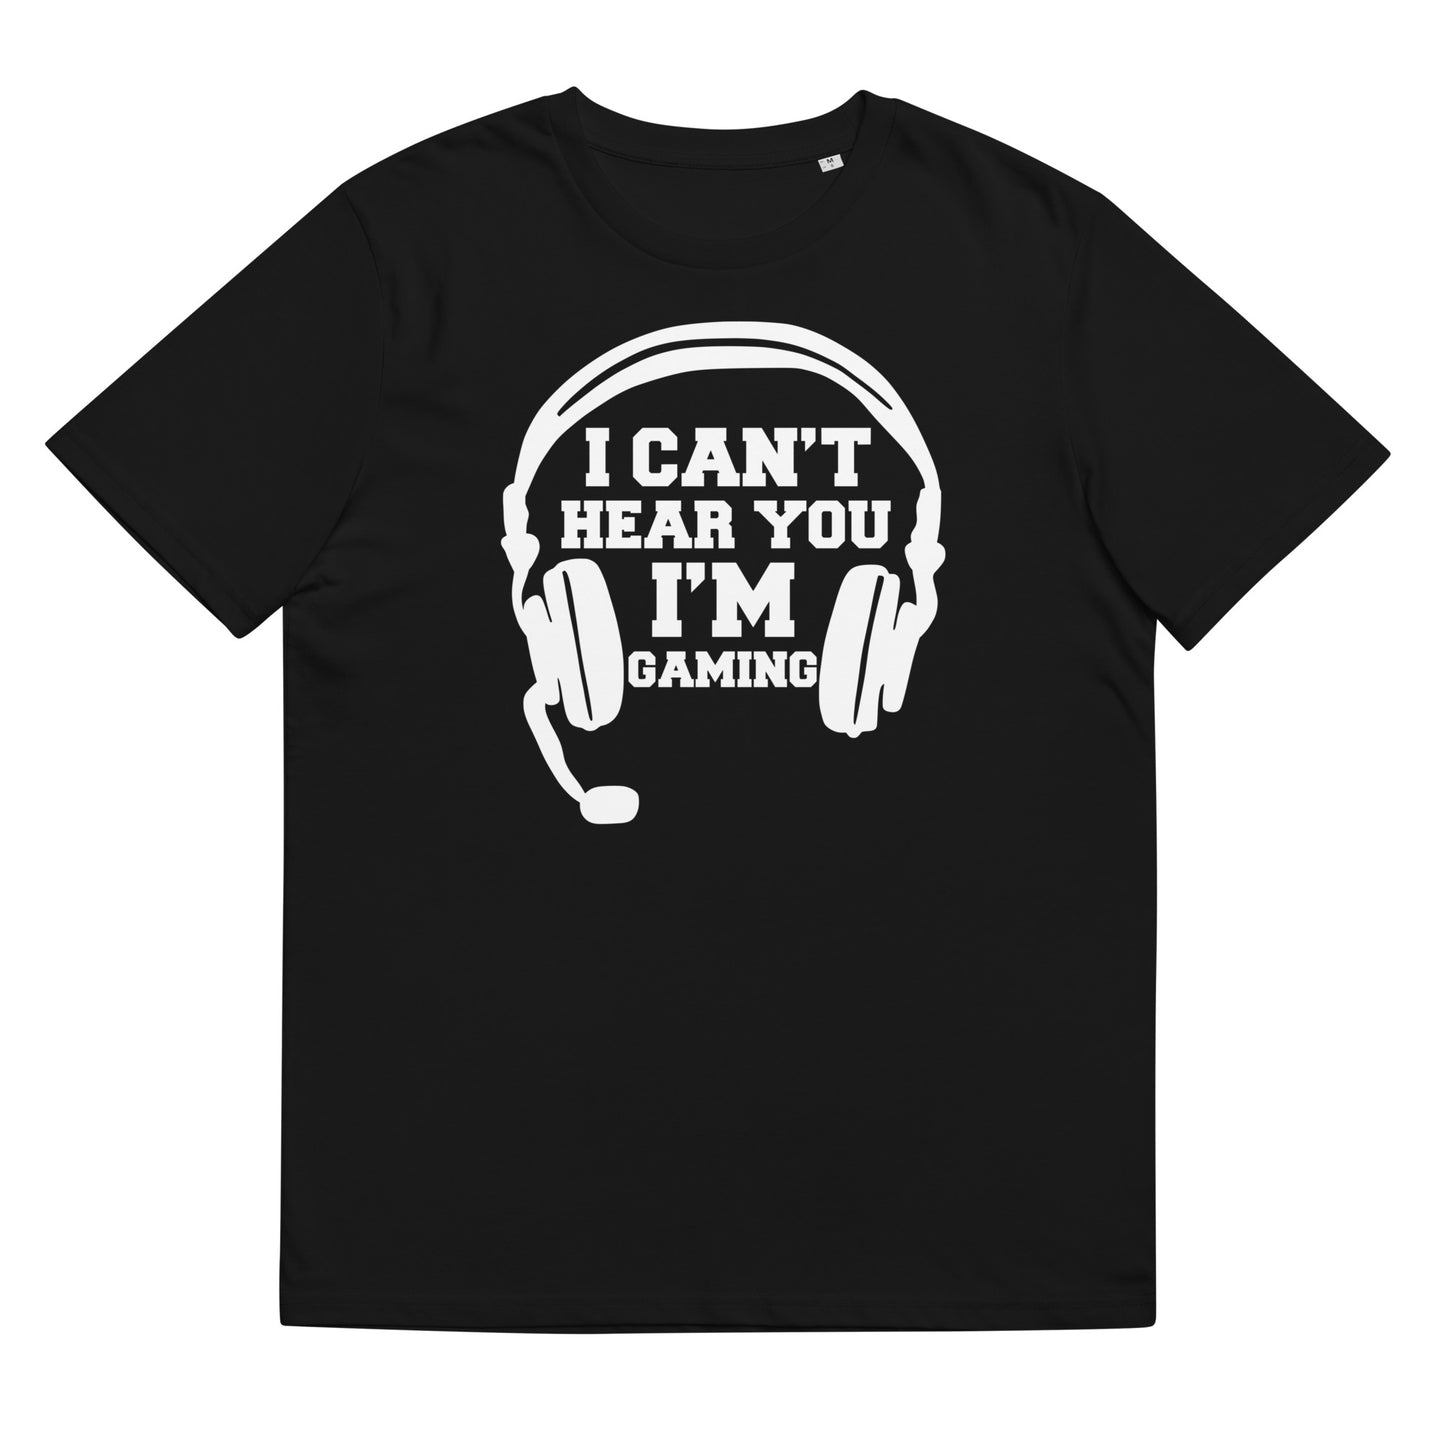 Organic cotton unisex t-shirt: "I can't hear you, i'm gaming", dark